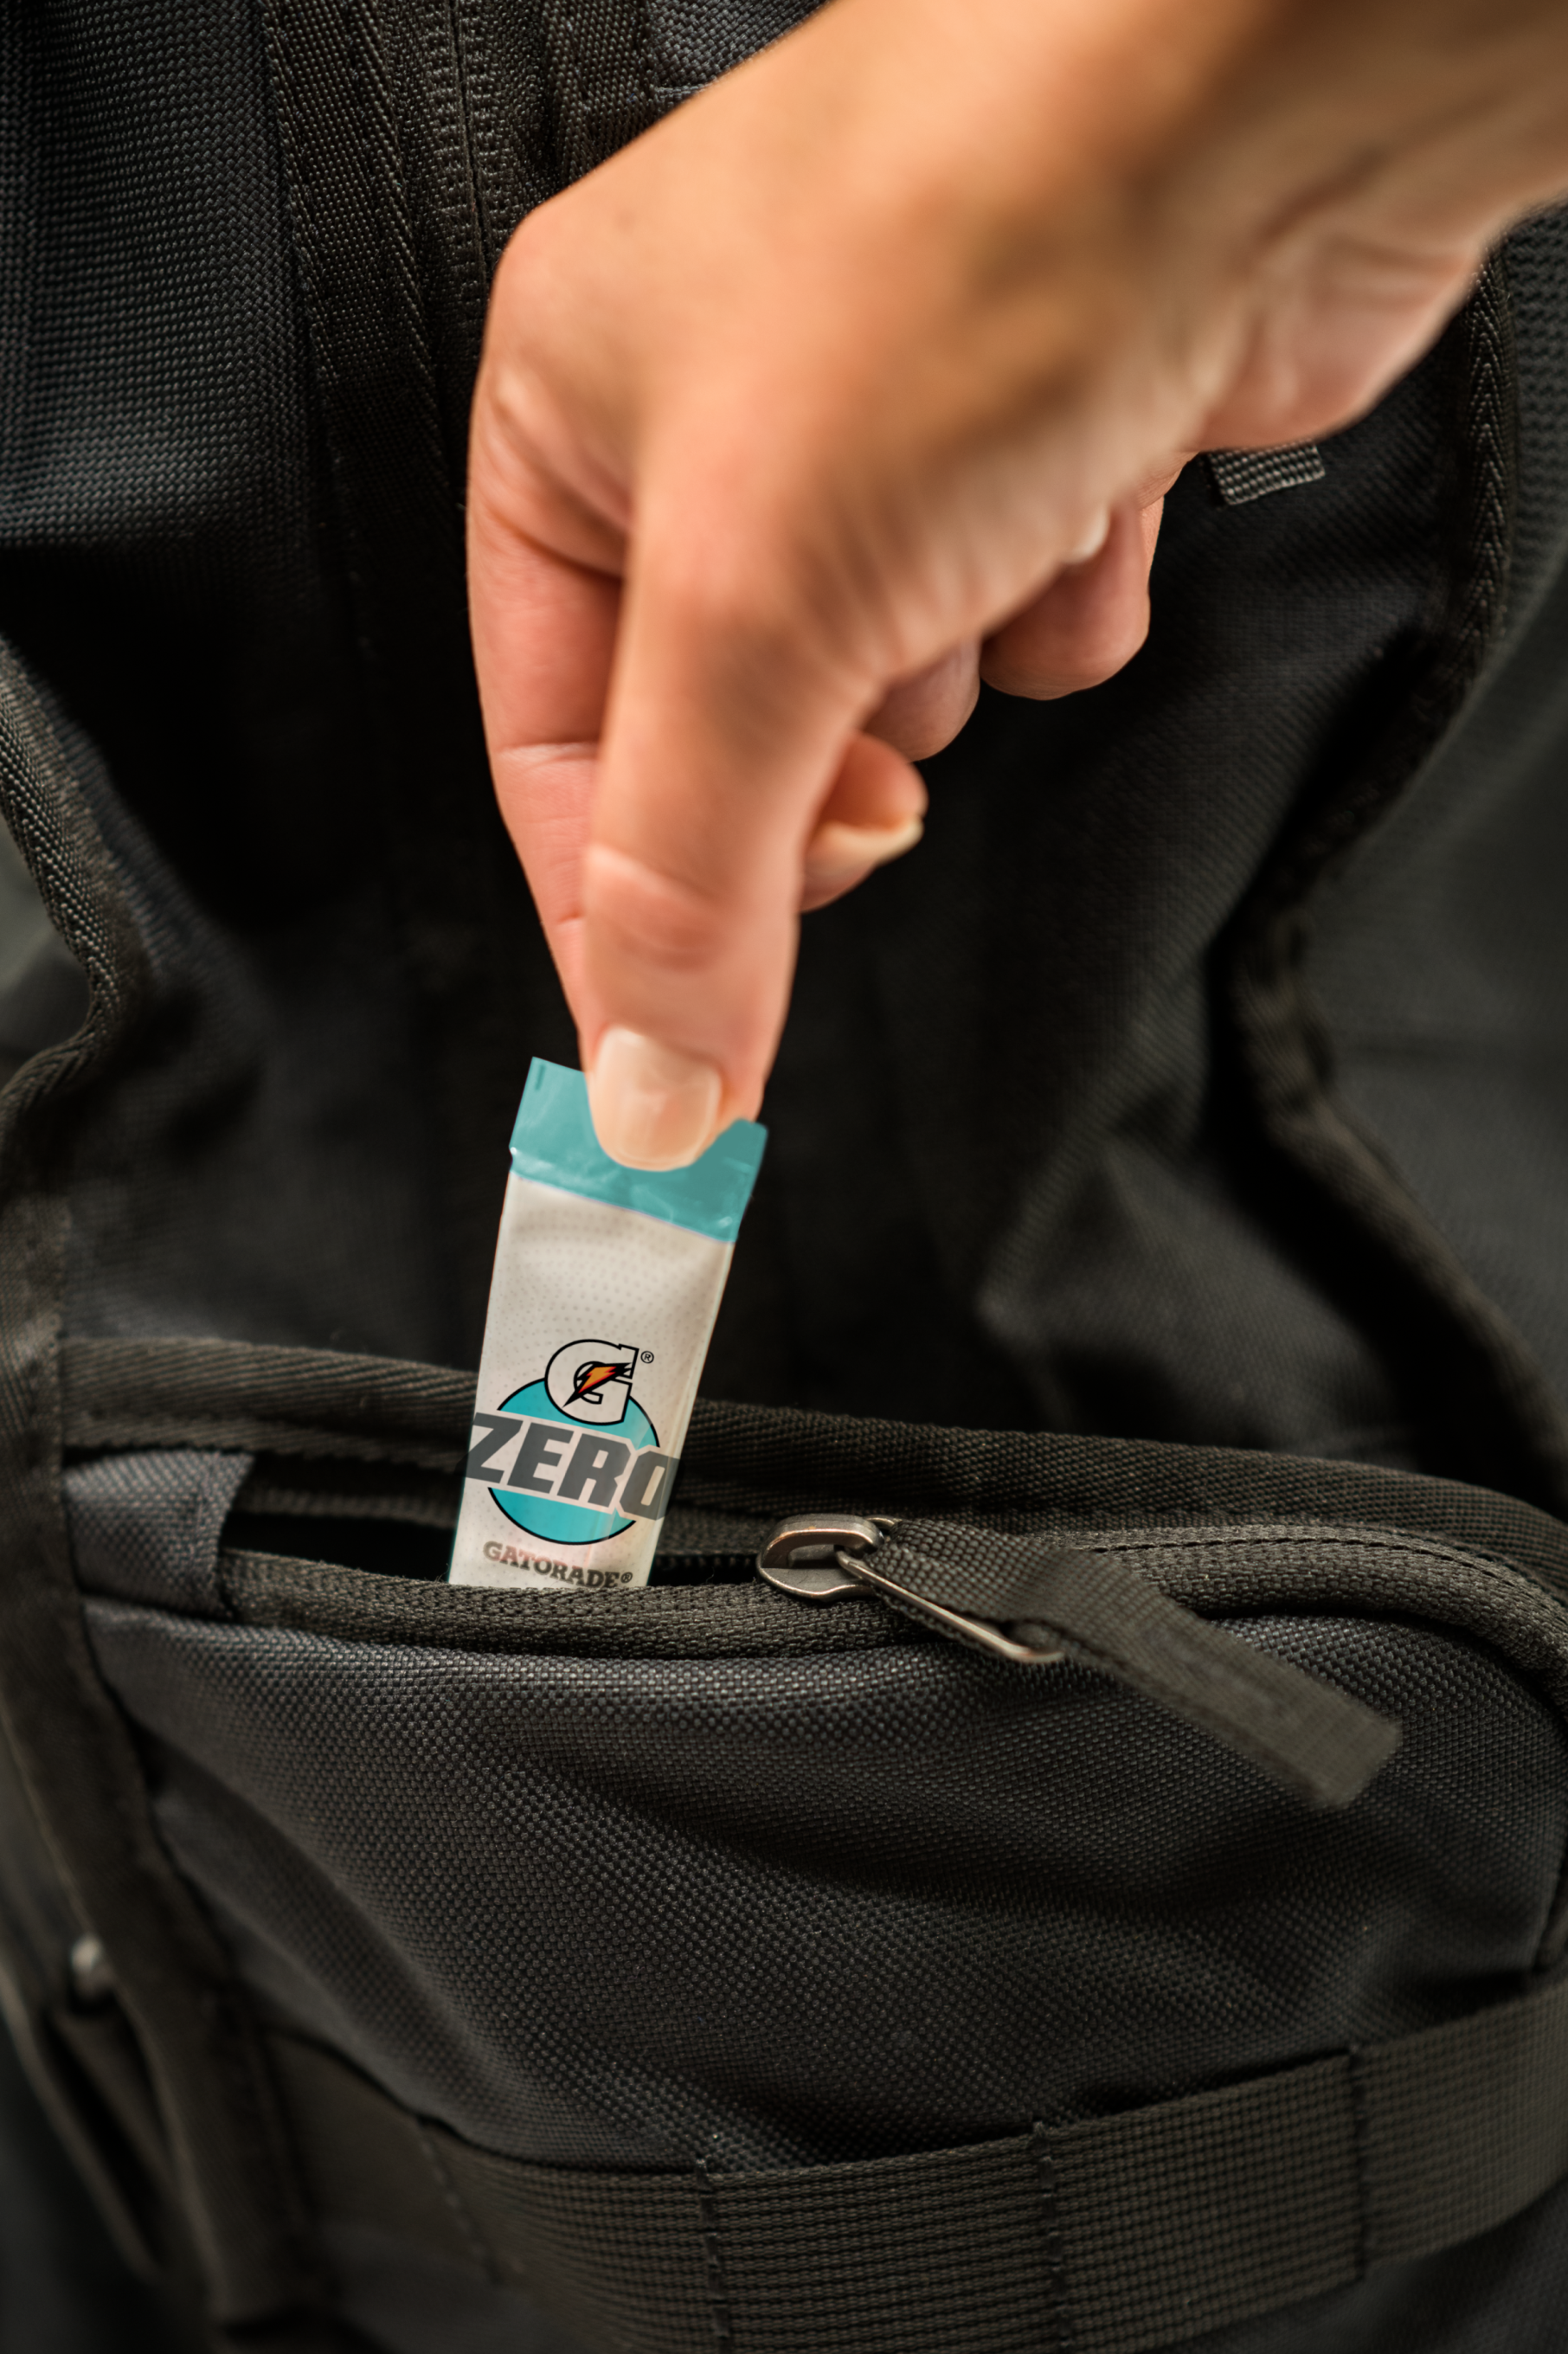 Gatorade zero glacier freeze package in pocket of athlete